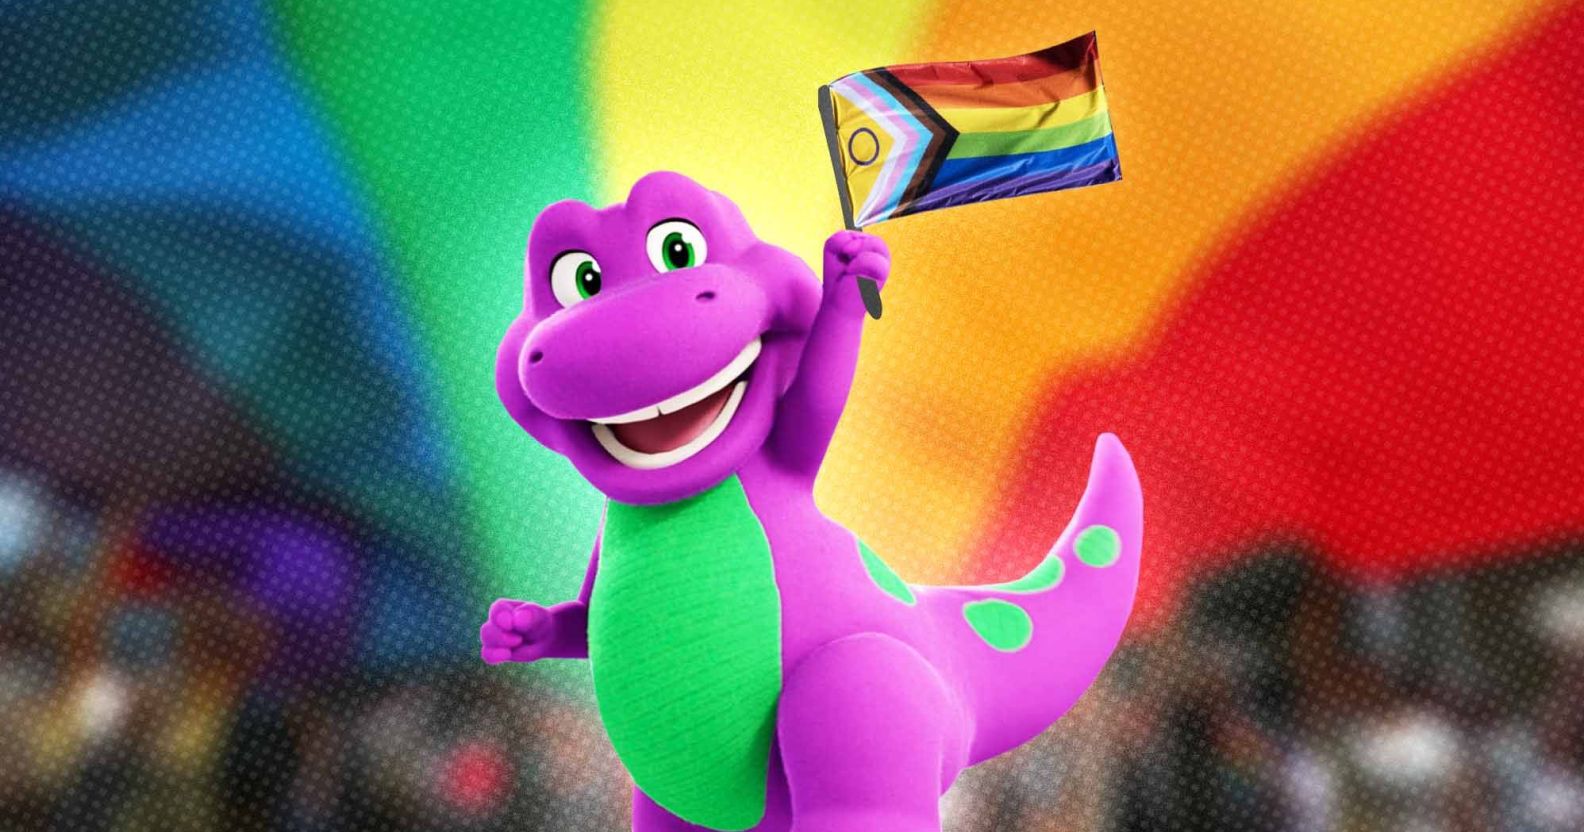 The new Mattel animated Barney dinosaur, holding a progress pride flag, stood against a rainbow background.